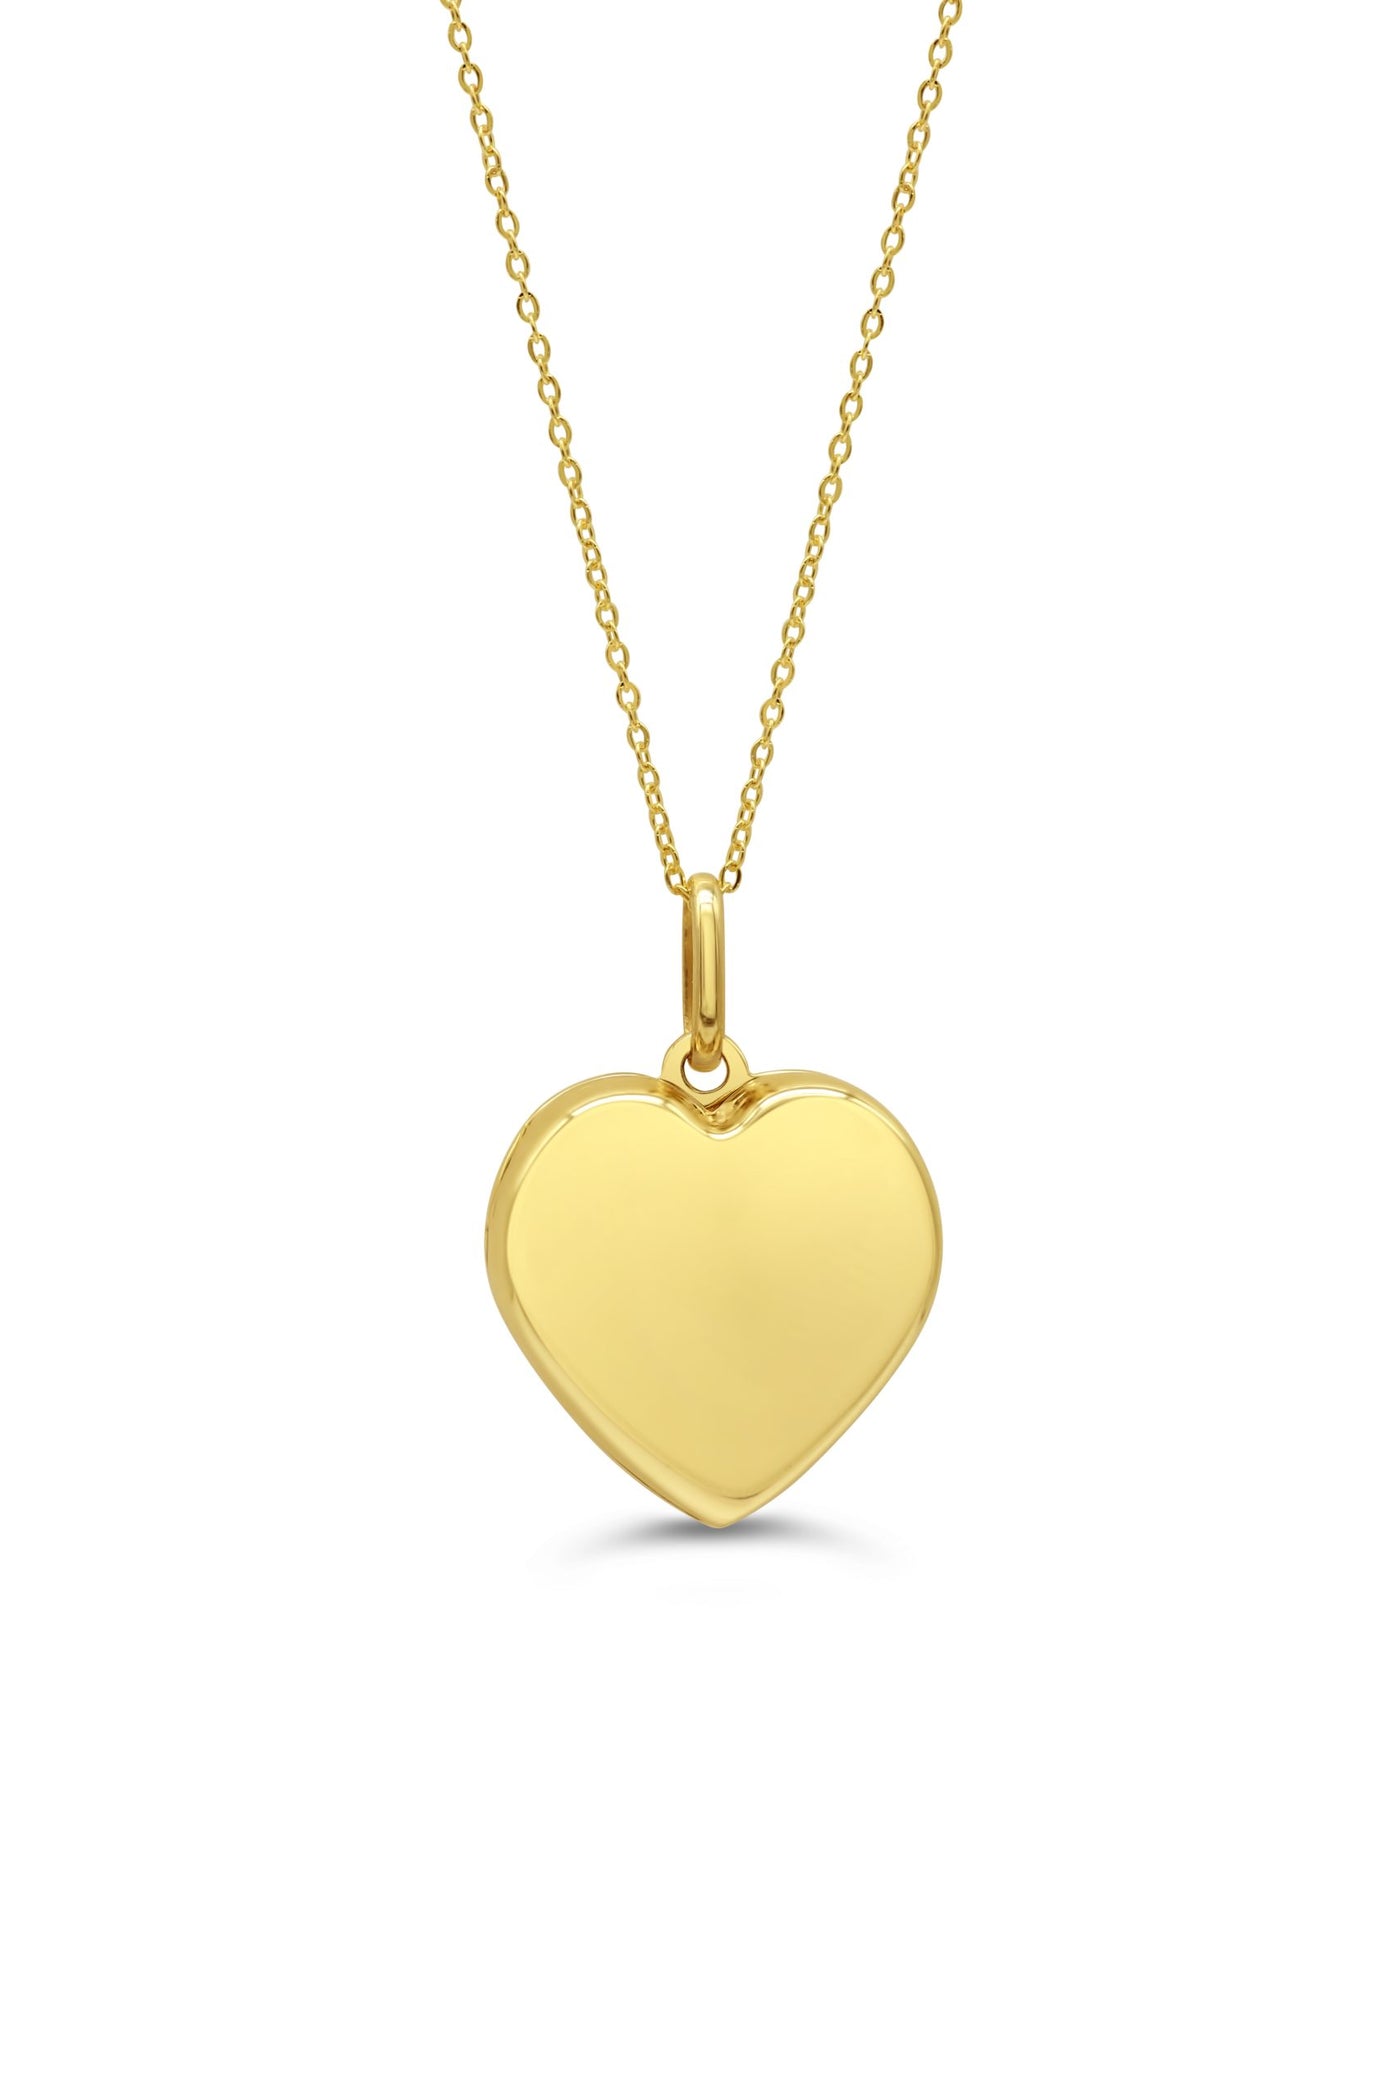 10 Karat Yellow Gold Heart Locket Necklace